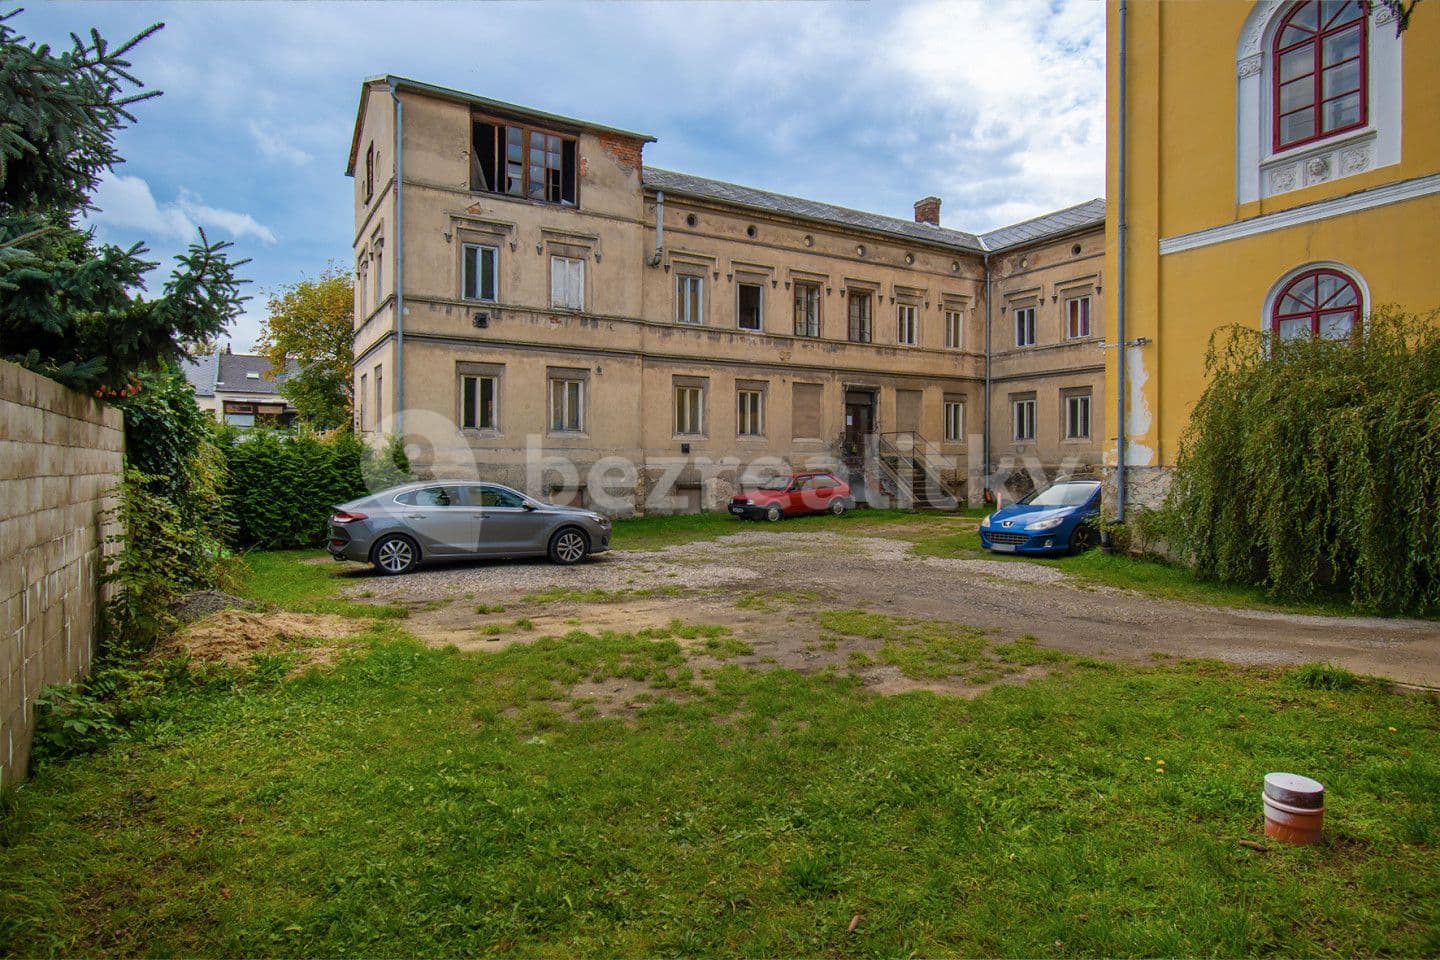 Prodej domu 570 m², pozemek 670 m², Palackého, Nový Bor, Liberecký kraj